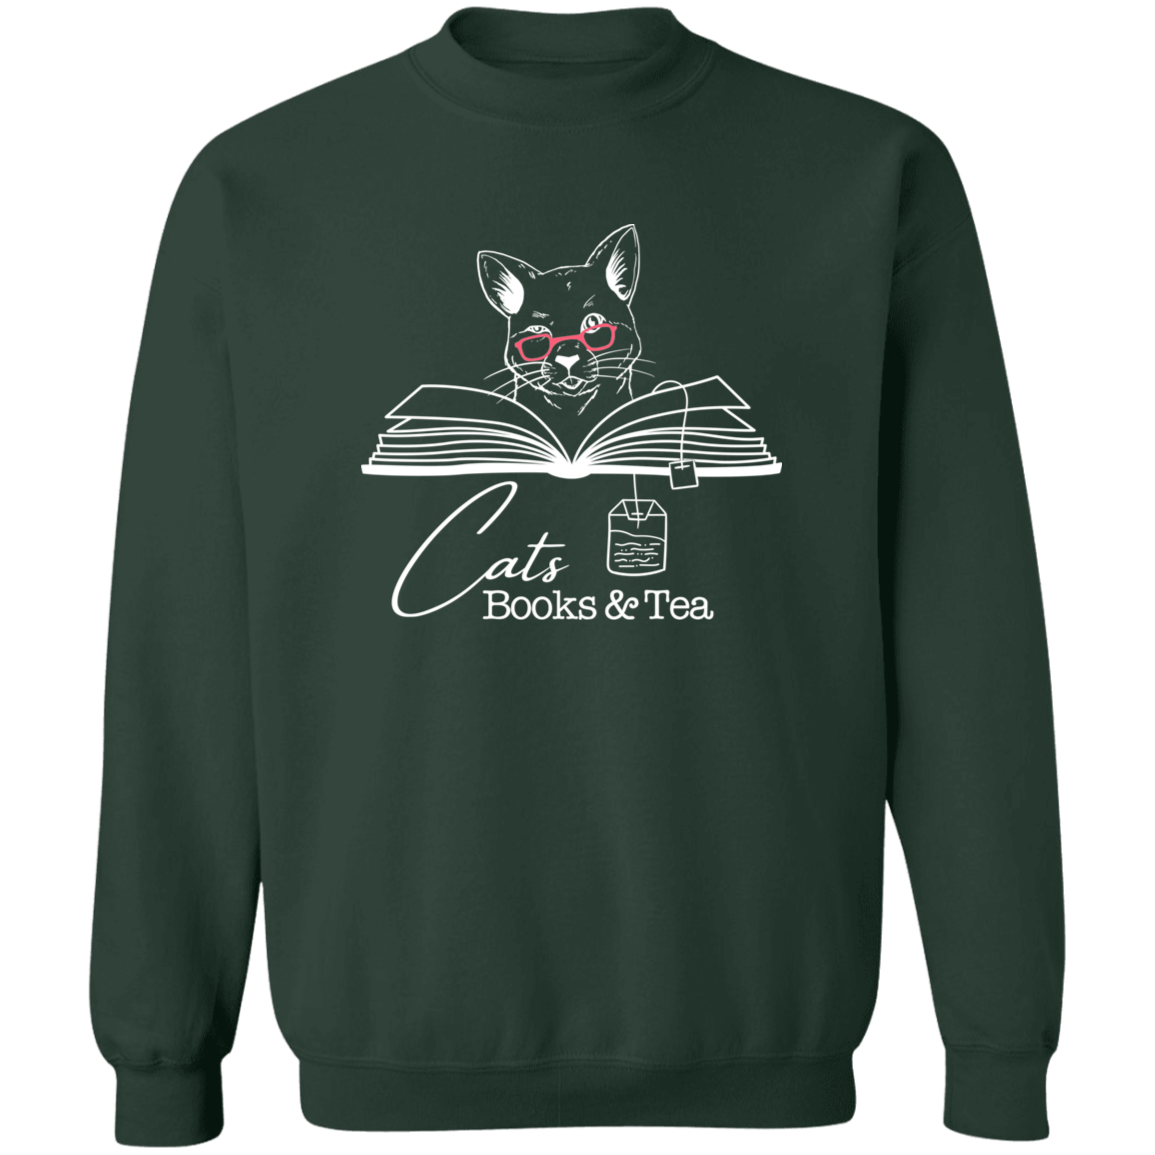 Cats, Books & Tea Book Lover Crewneck Sweatshirt